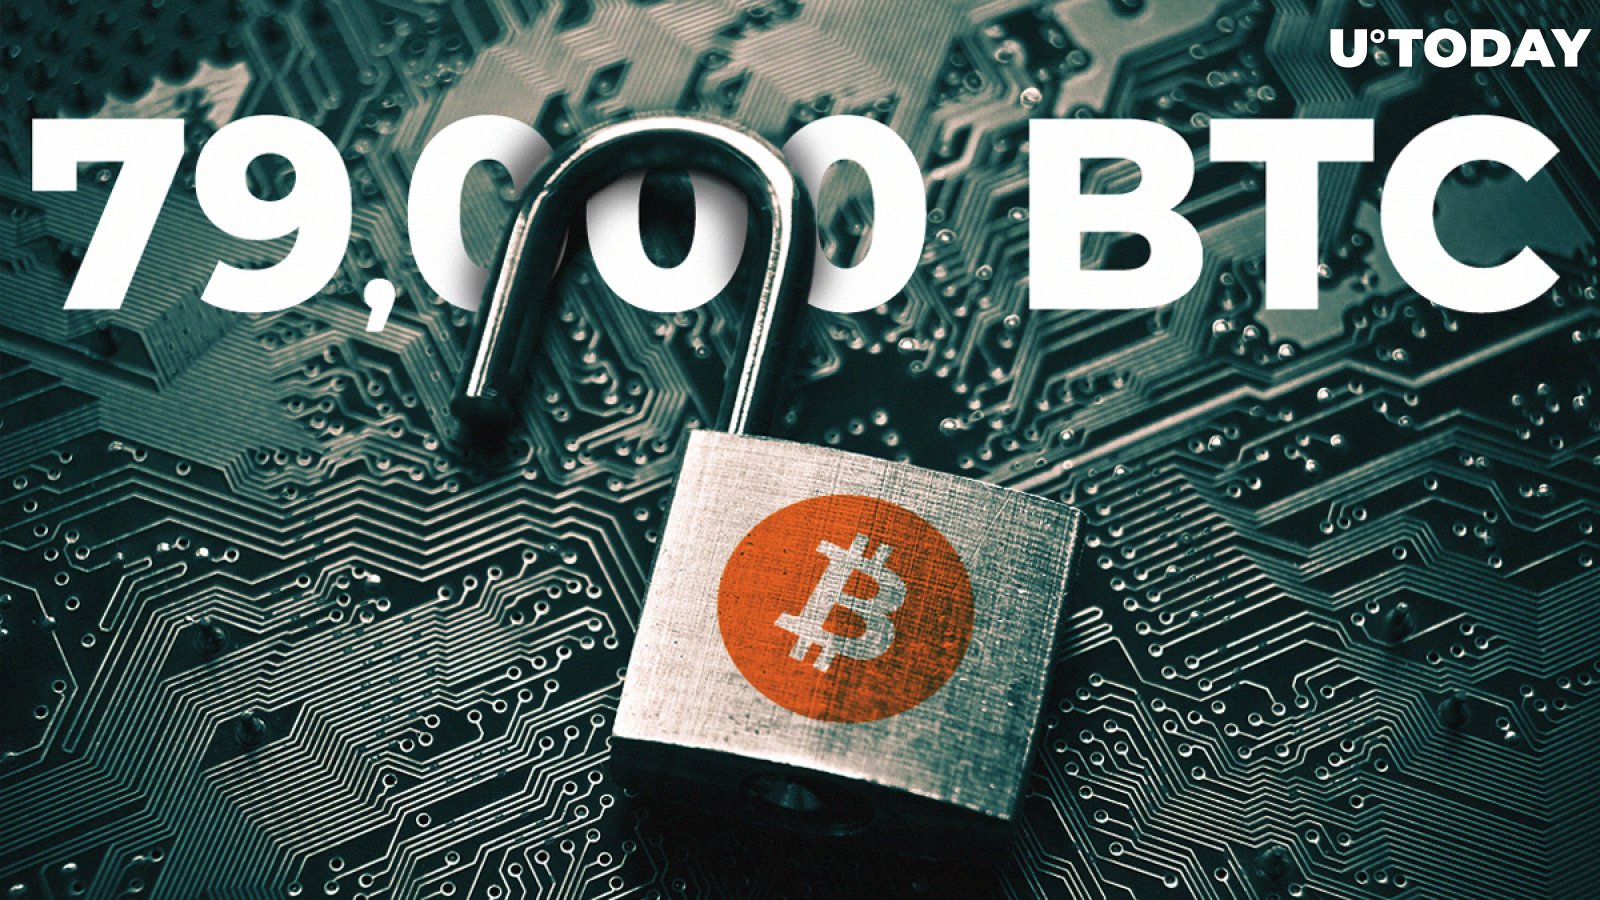 mtgox bitcoins stolen identity